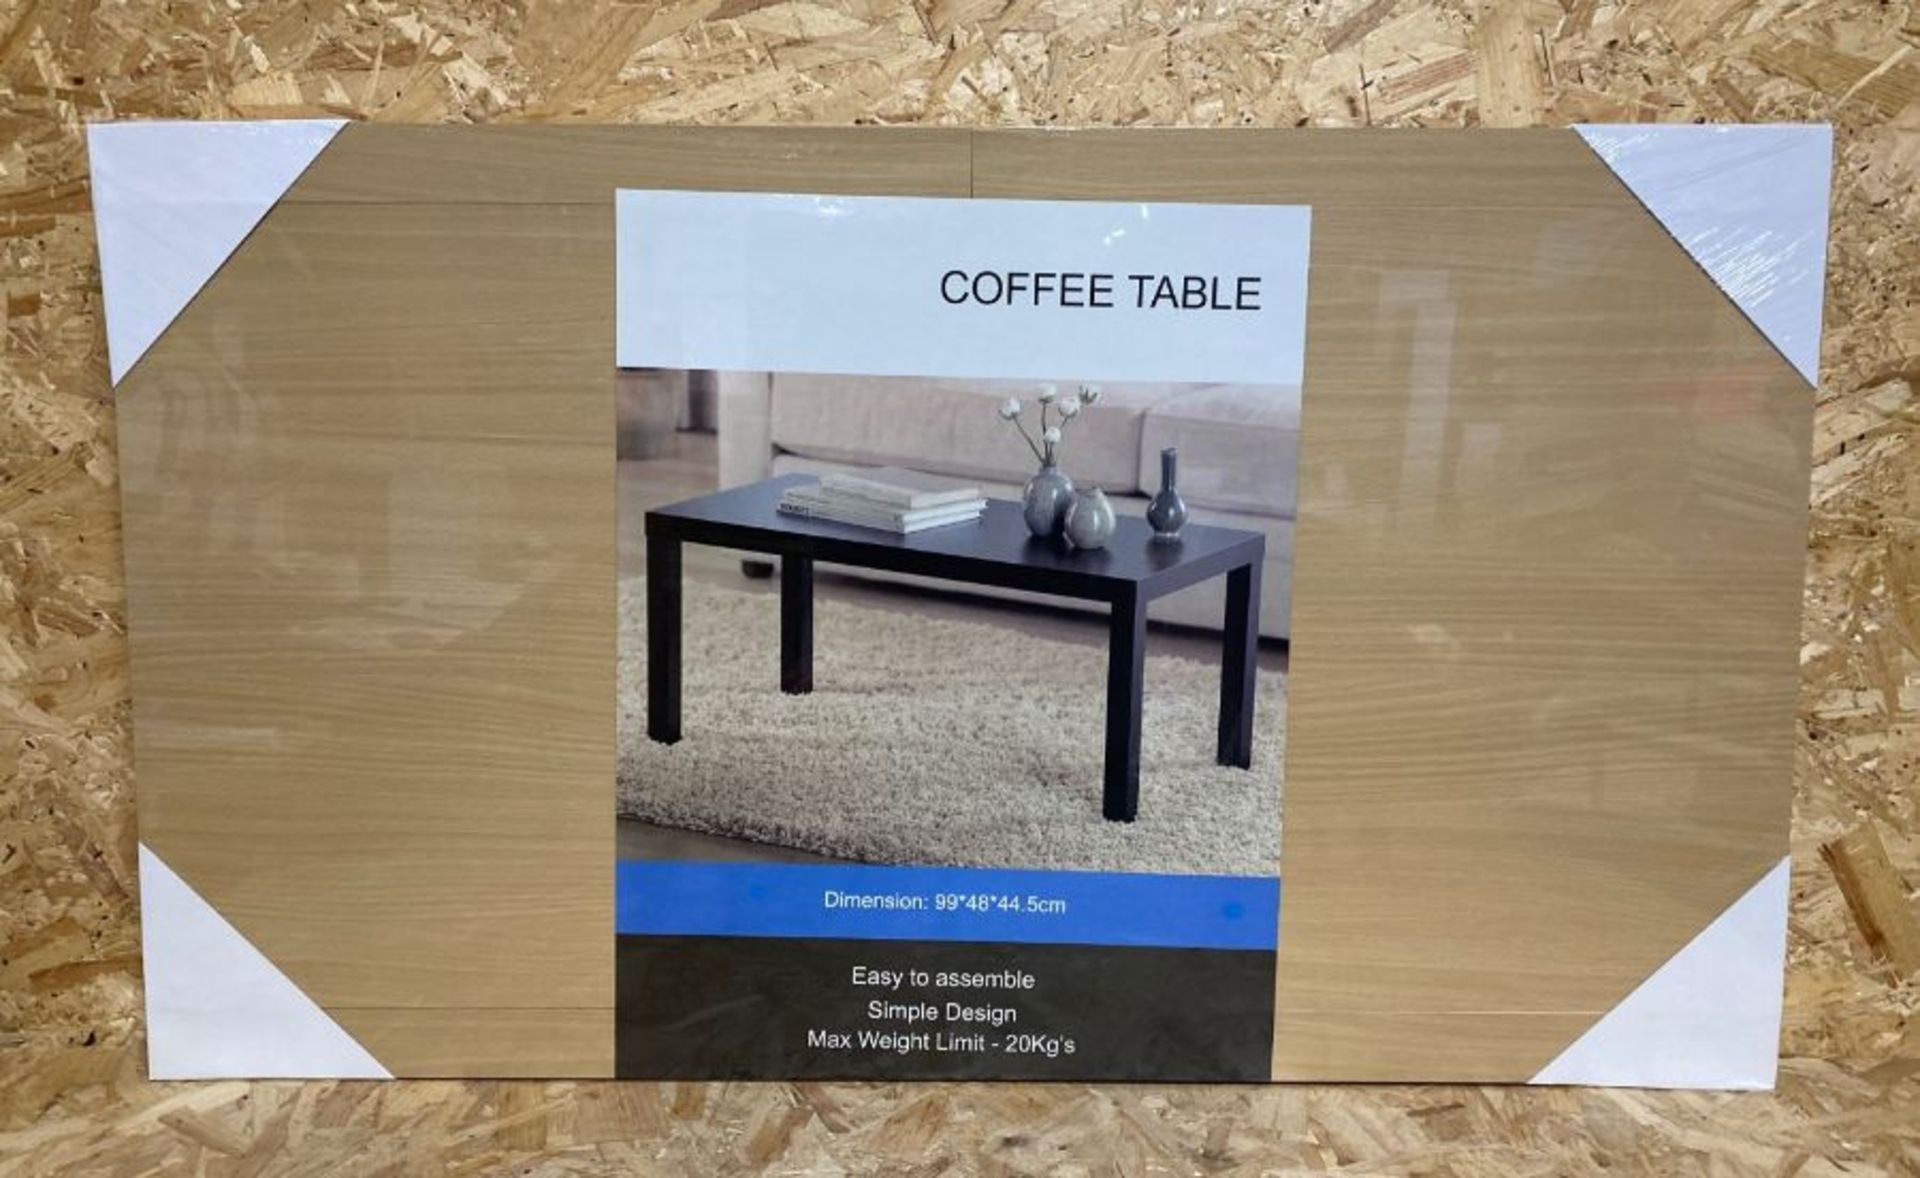 4 X COFFEE TABLES - COLOUR: OAK / SIZE: 99 X 48 X 44.5cm / BRAND NEW & BOXED